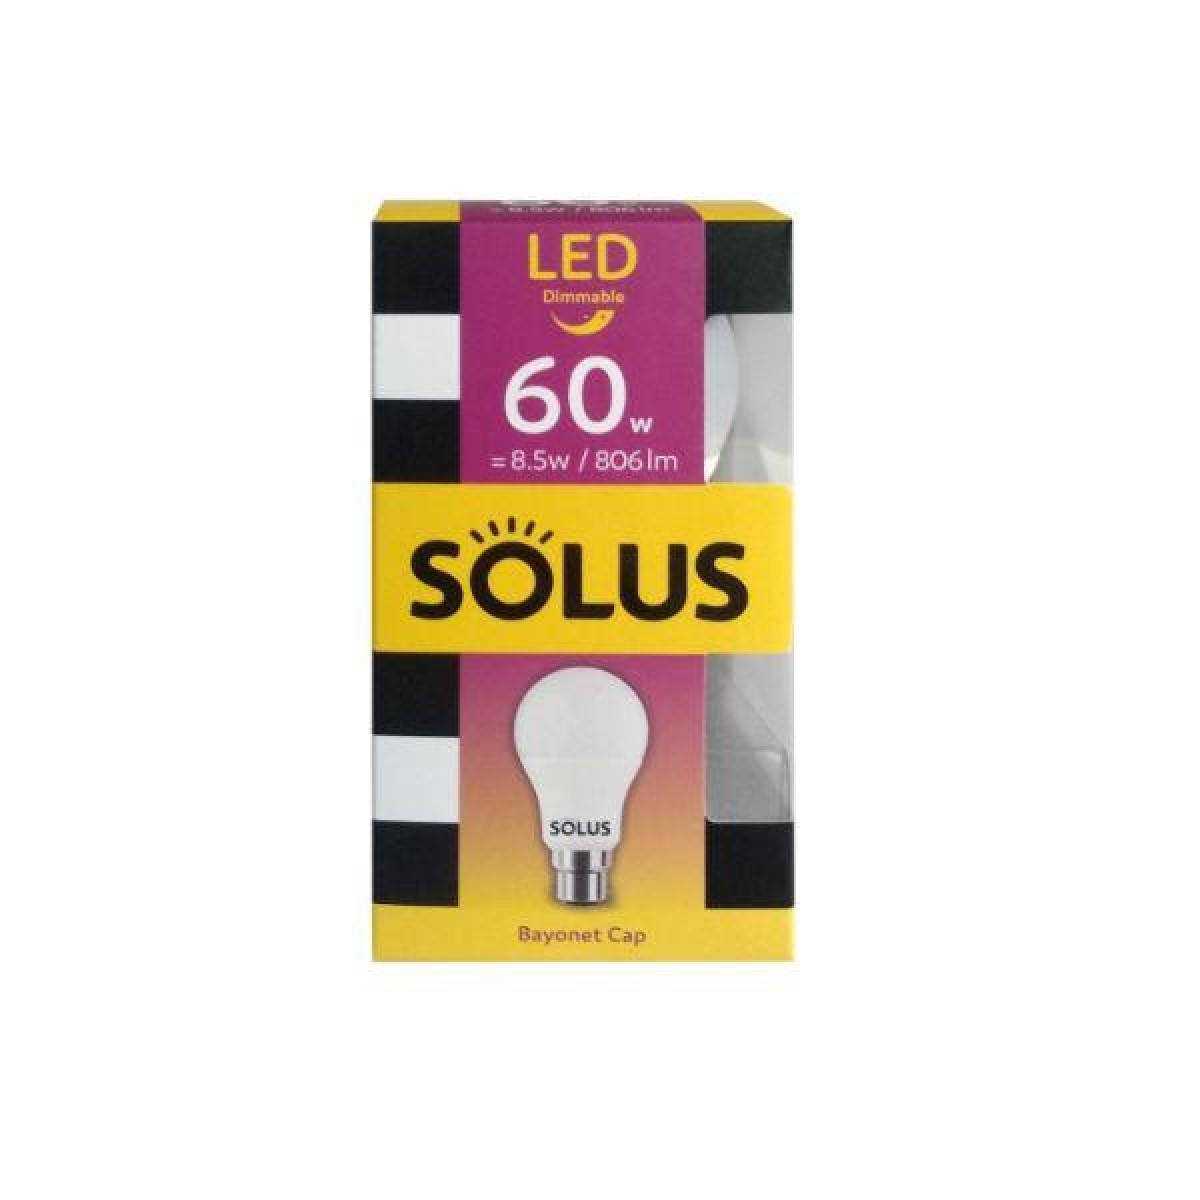 Solus LED Bulb 60W Dimmable - bayonet cap